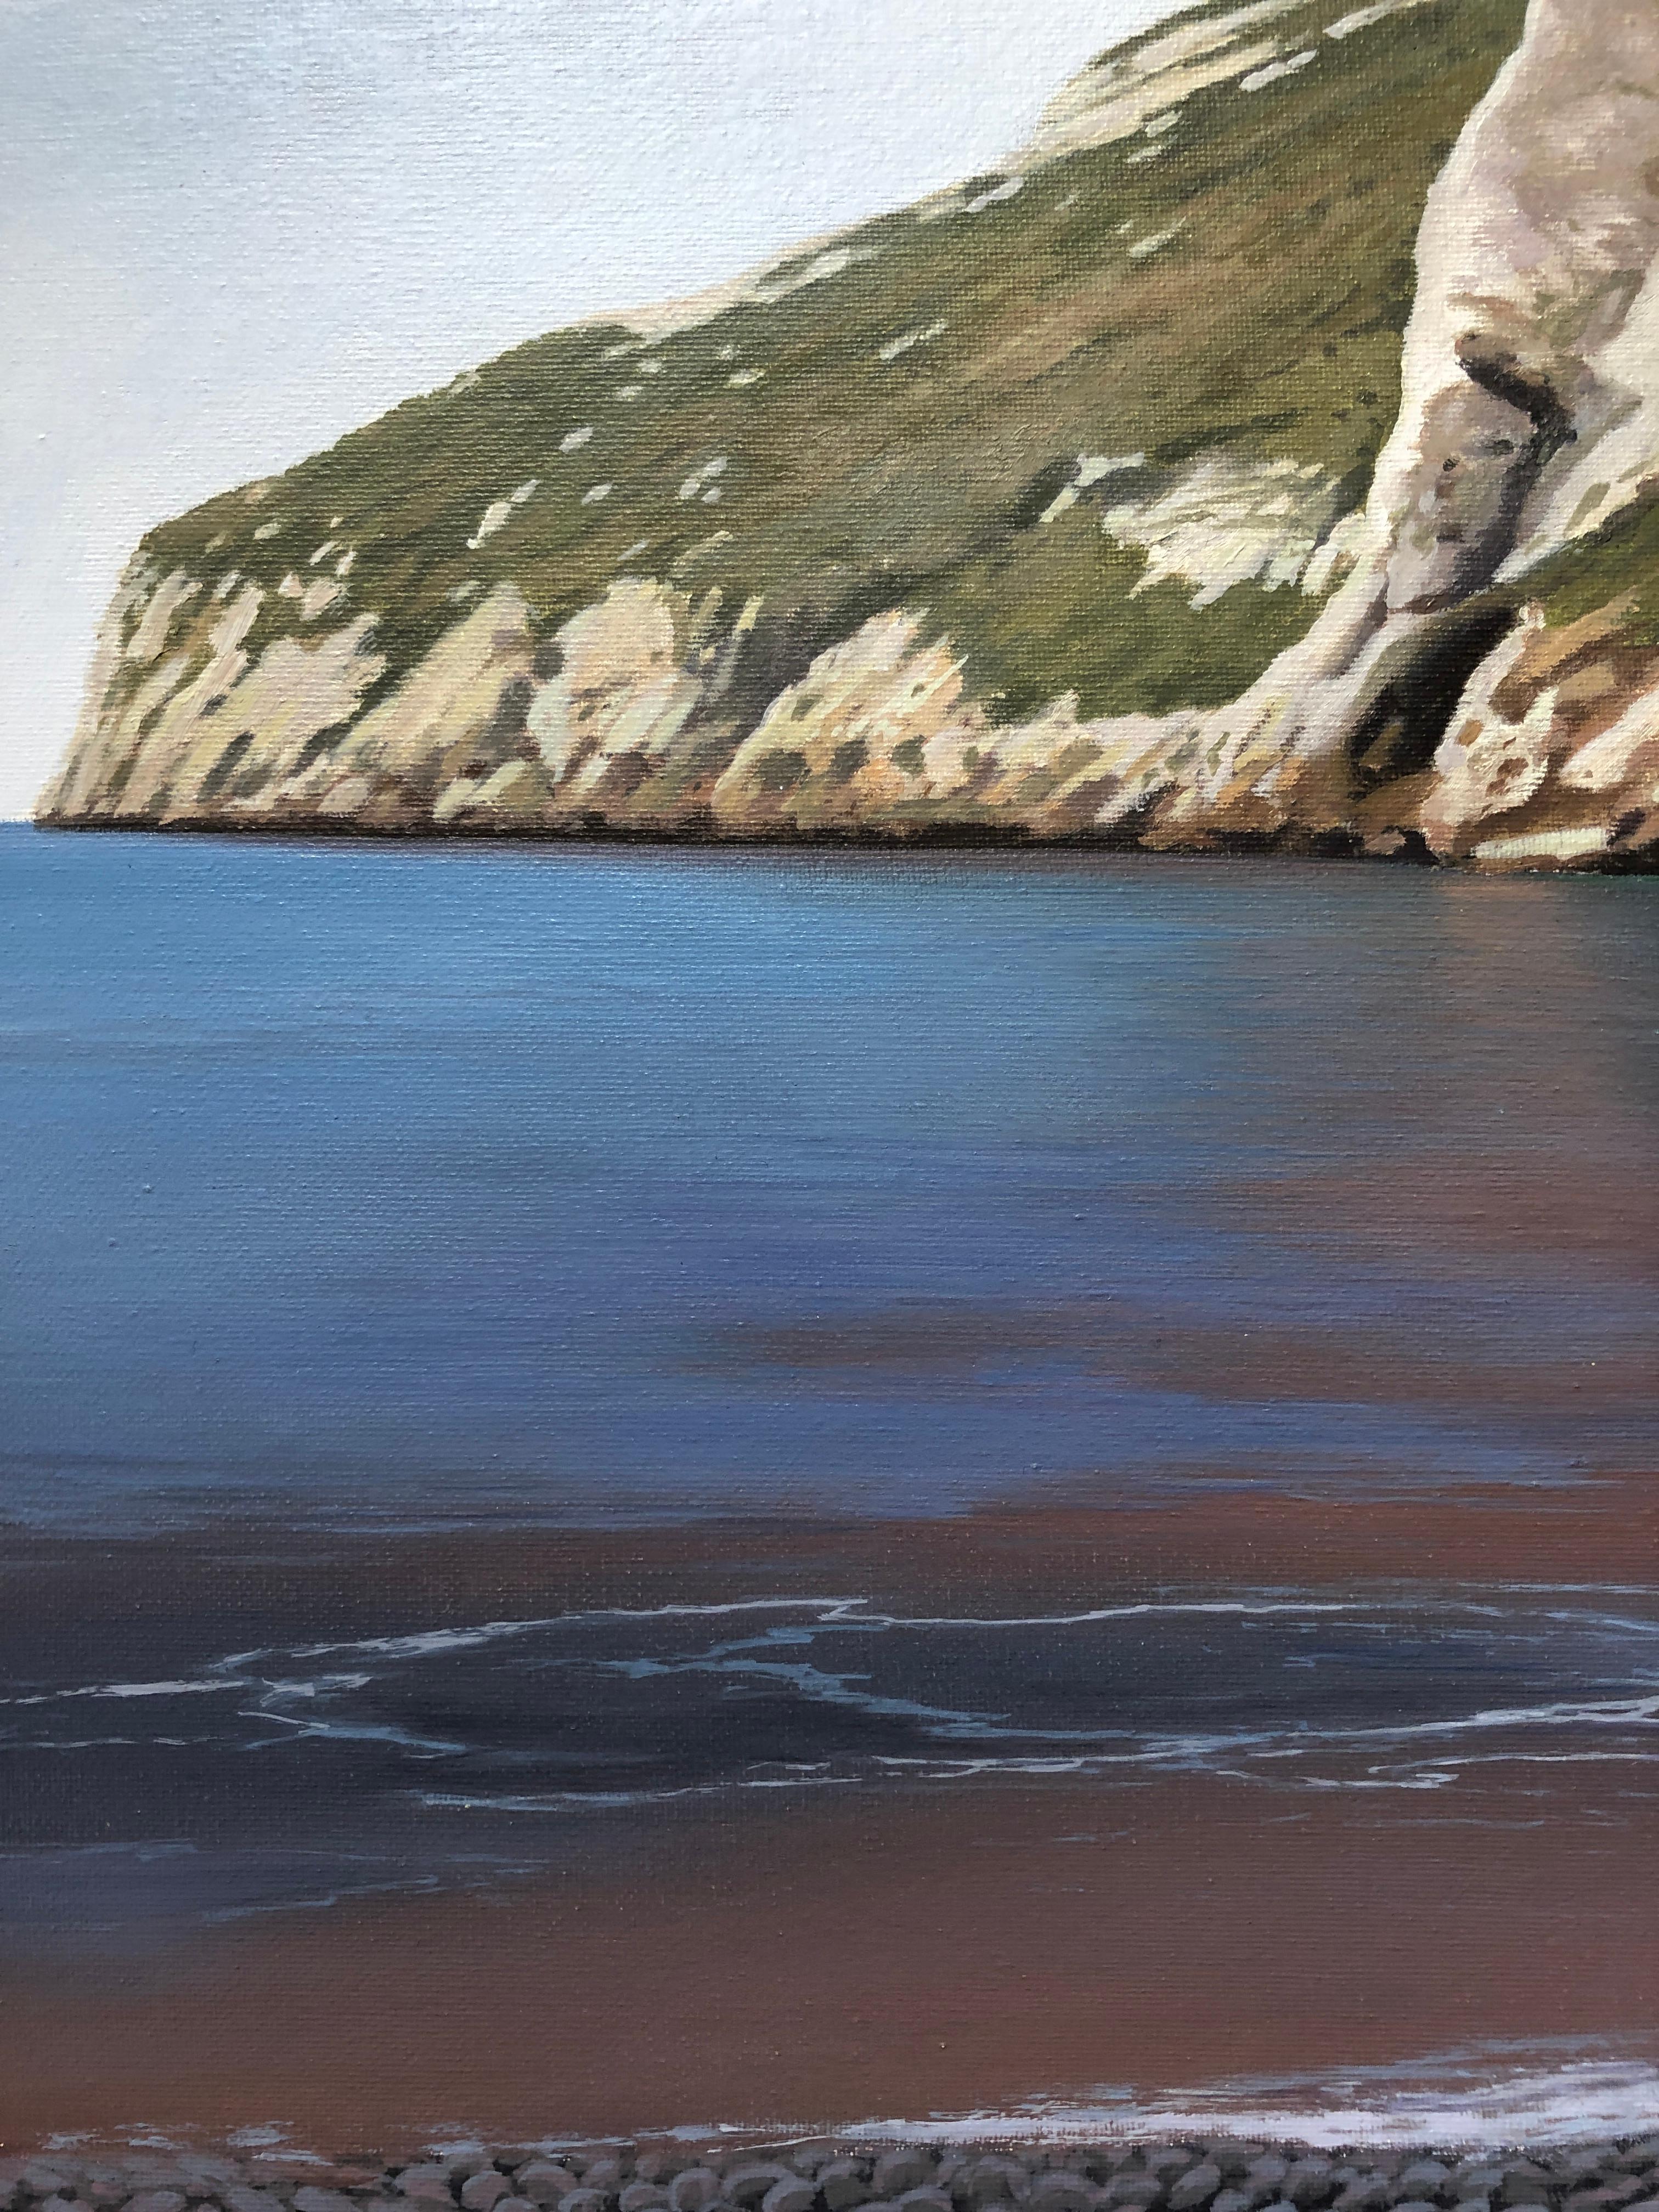  Cala Granadella, Rocky Cliffs Diving into the Ocean, Detailed Surreal Landscape For Sale 2